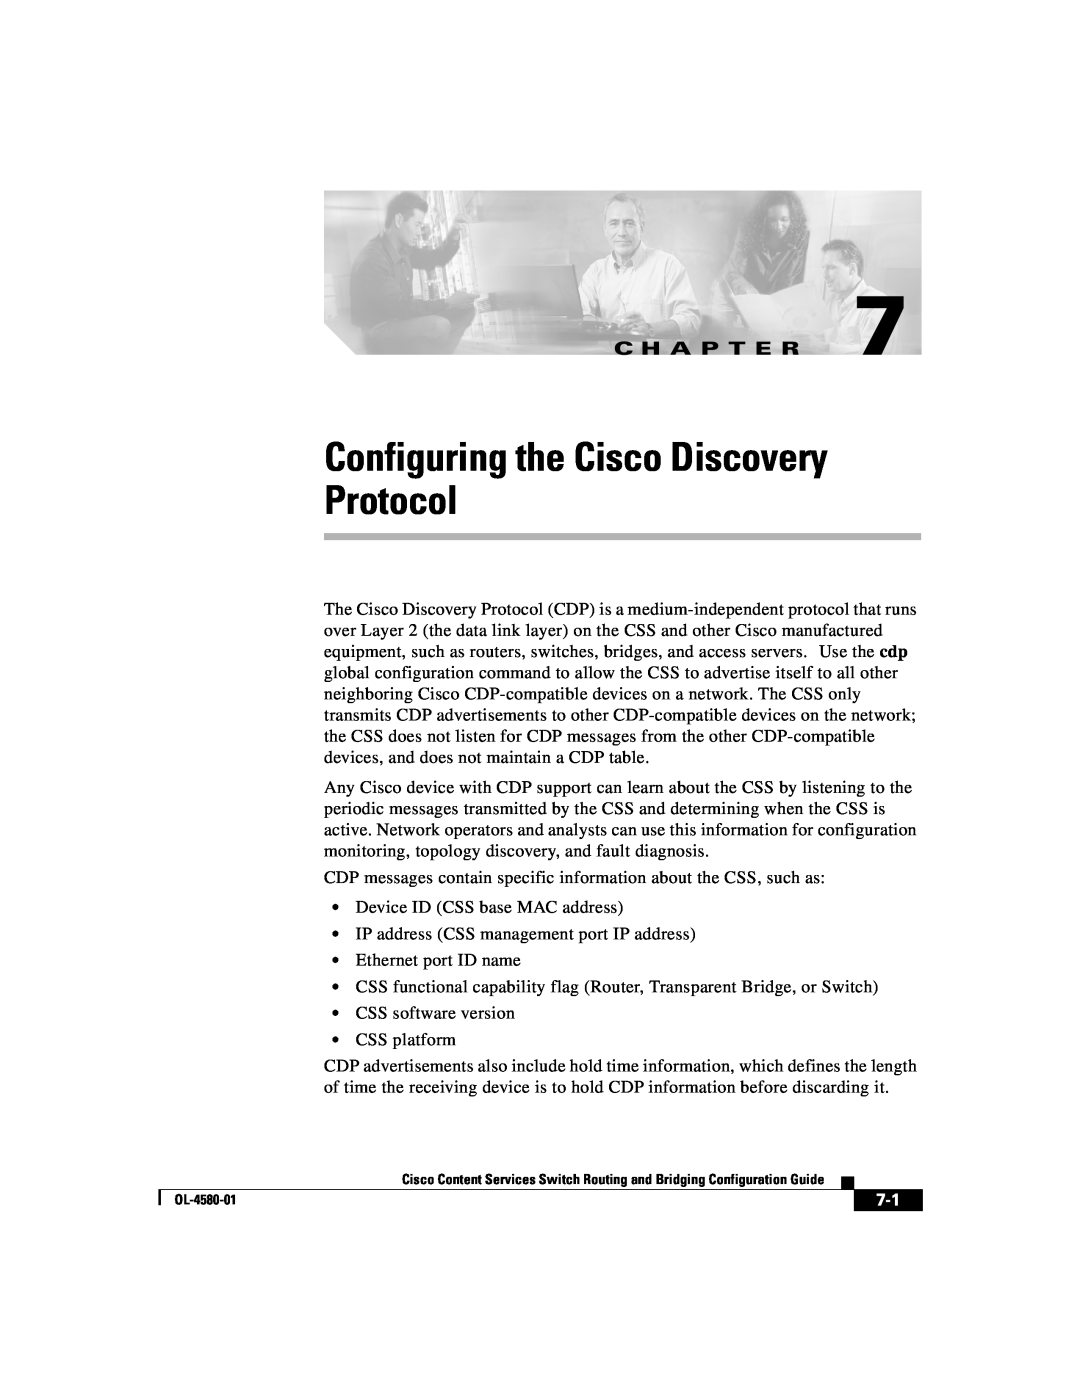 Cisco Systems OL-4580-01 manual Configuring the Cisco Discovery Protocol, C H A P T E R 